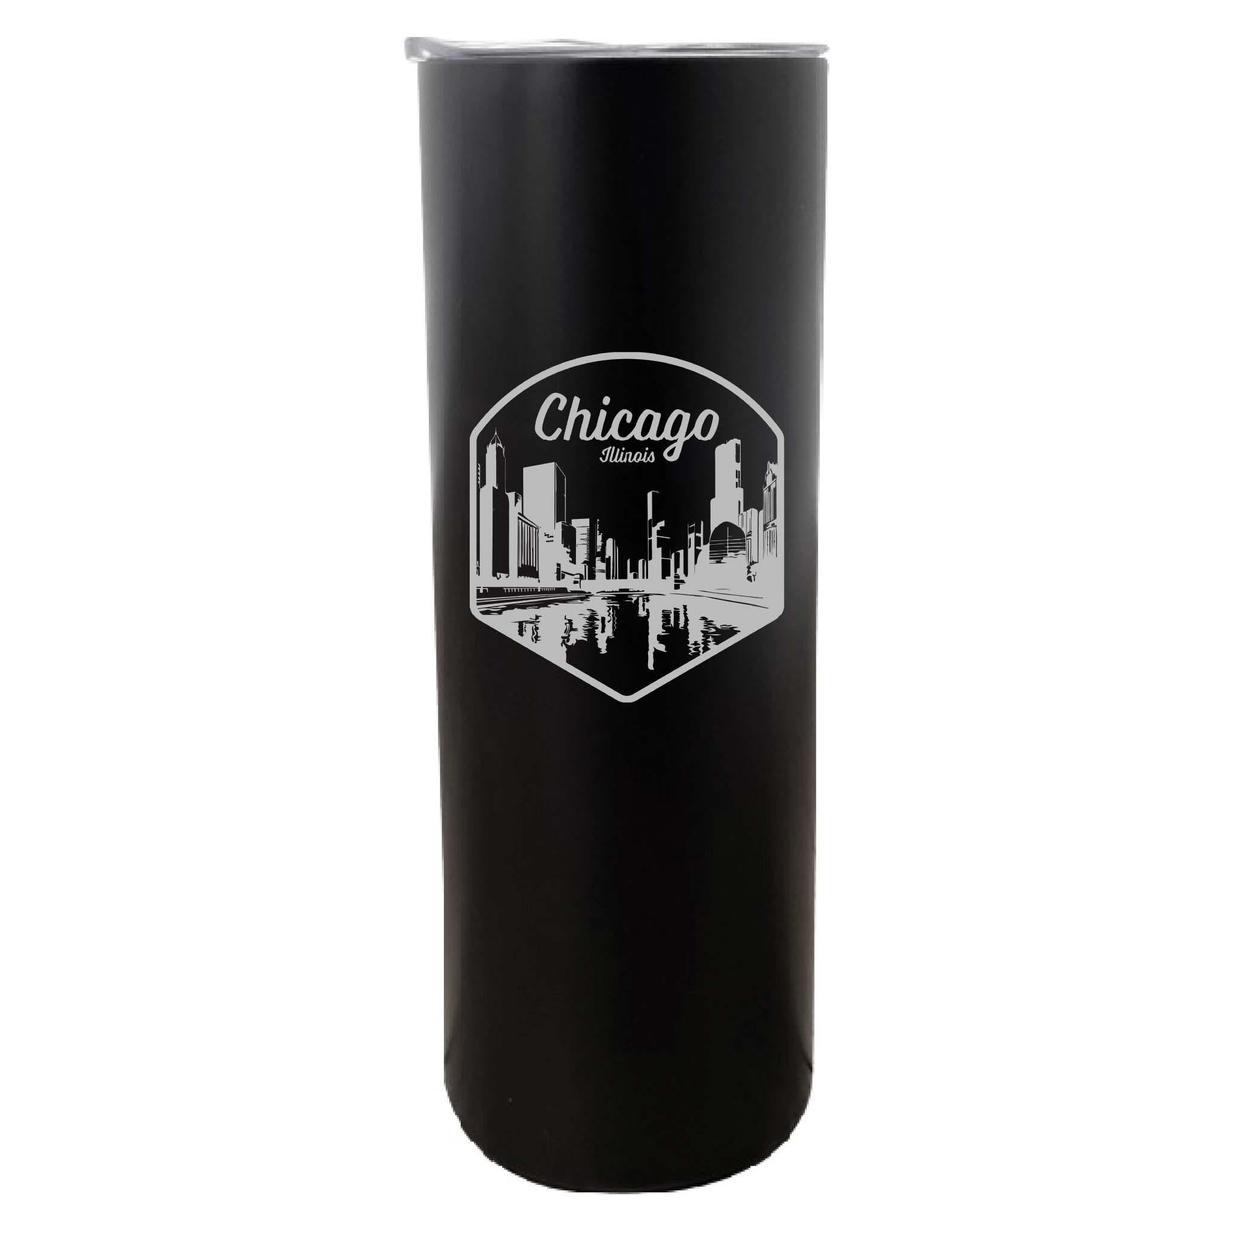 Chicago Illinois Souvenir 20 Oz Engraved Insulated Skinny Tumbler - Black,,Single Unit